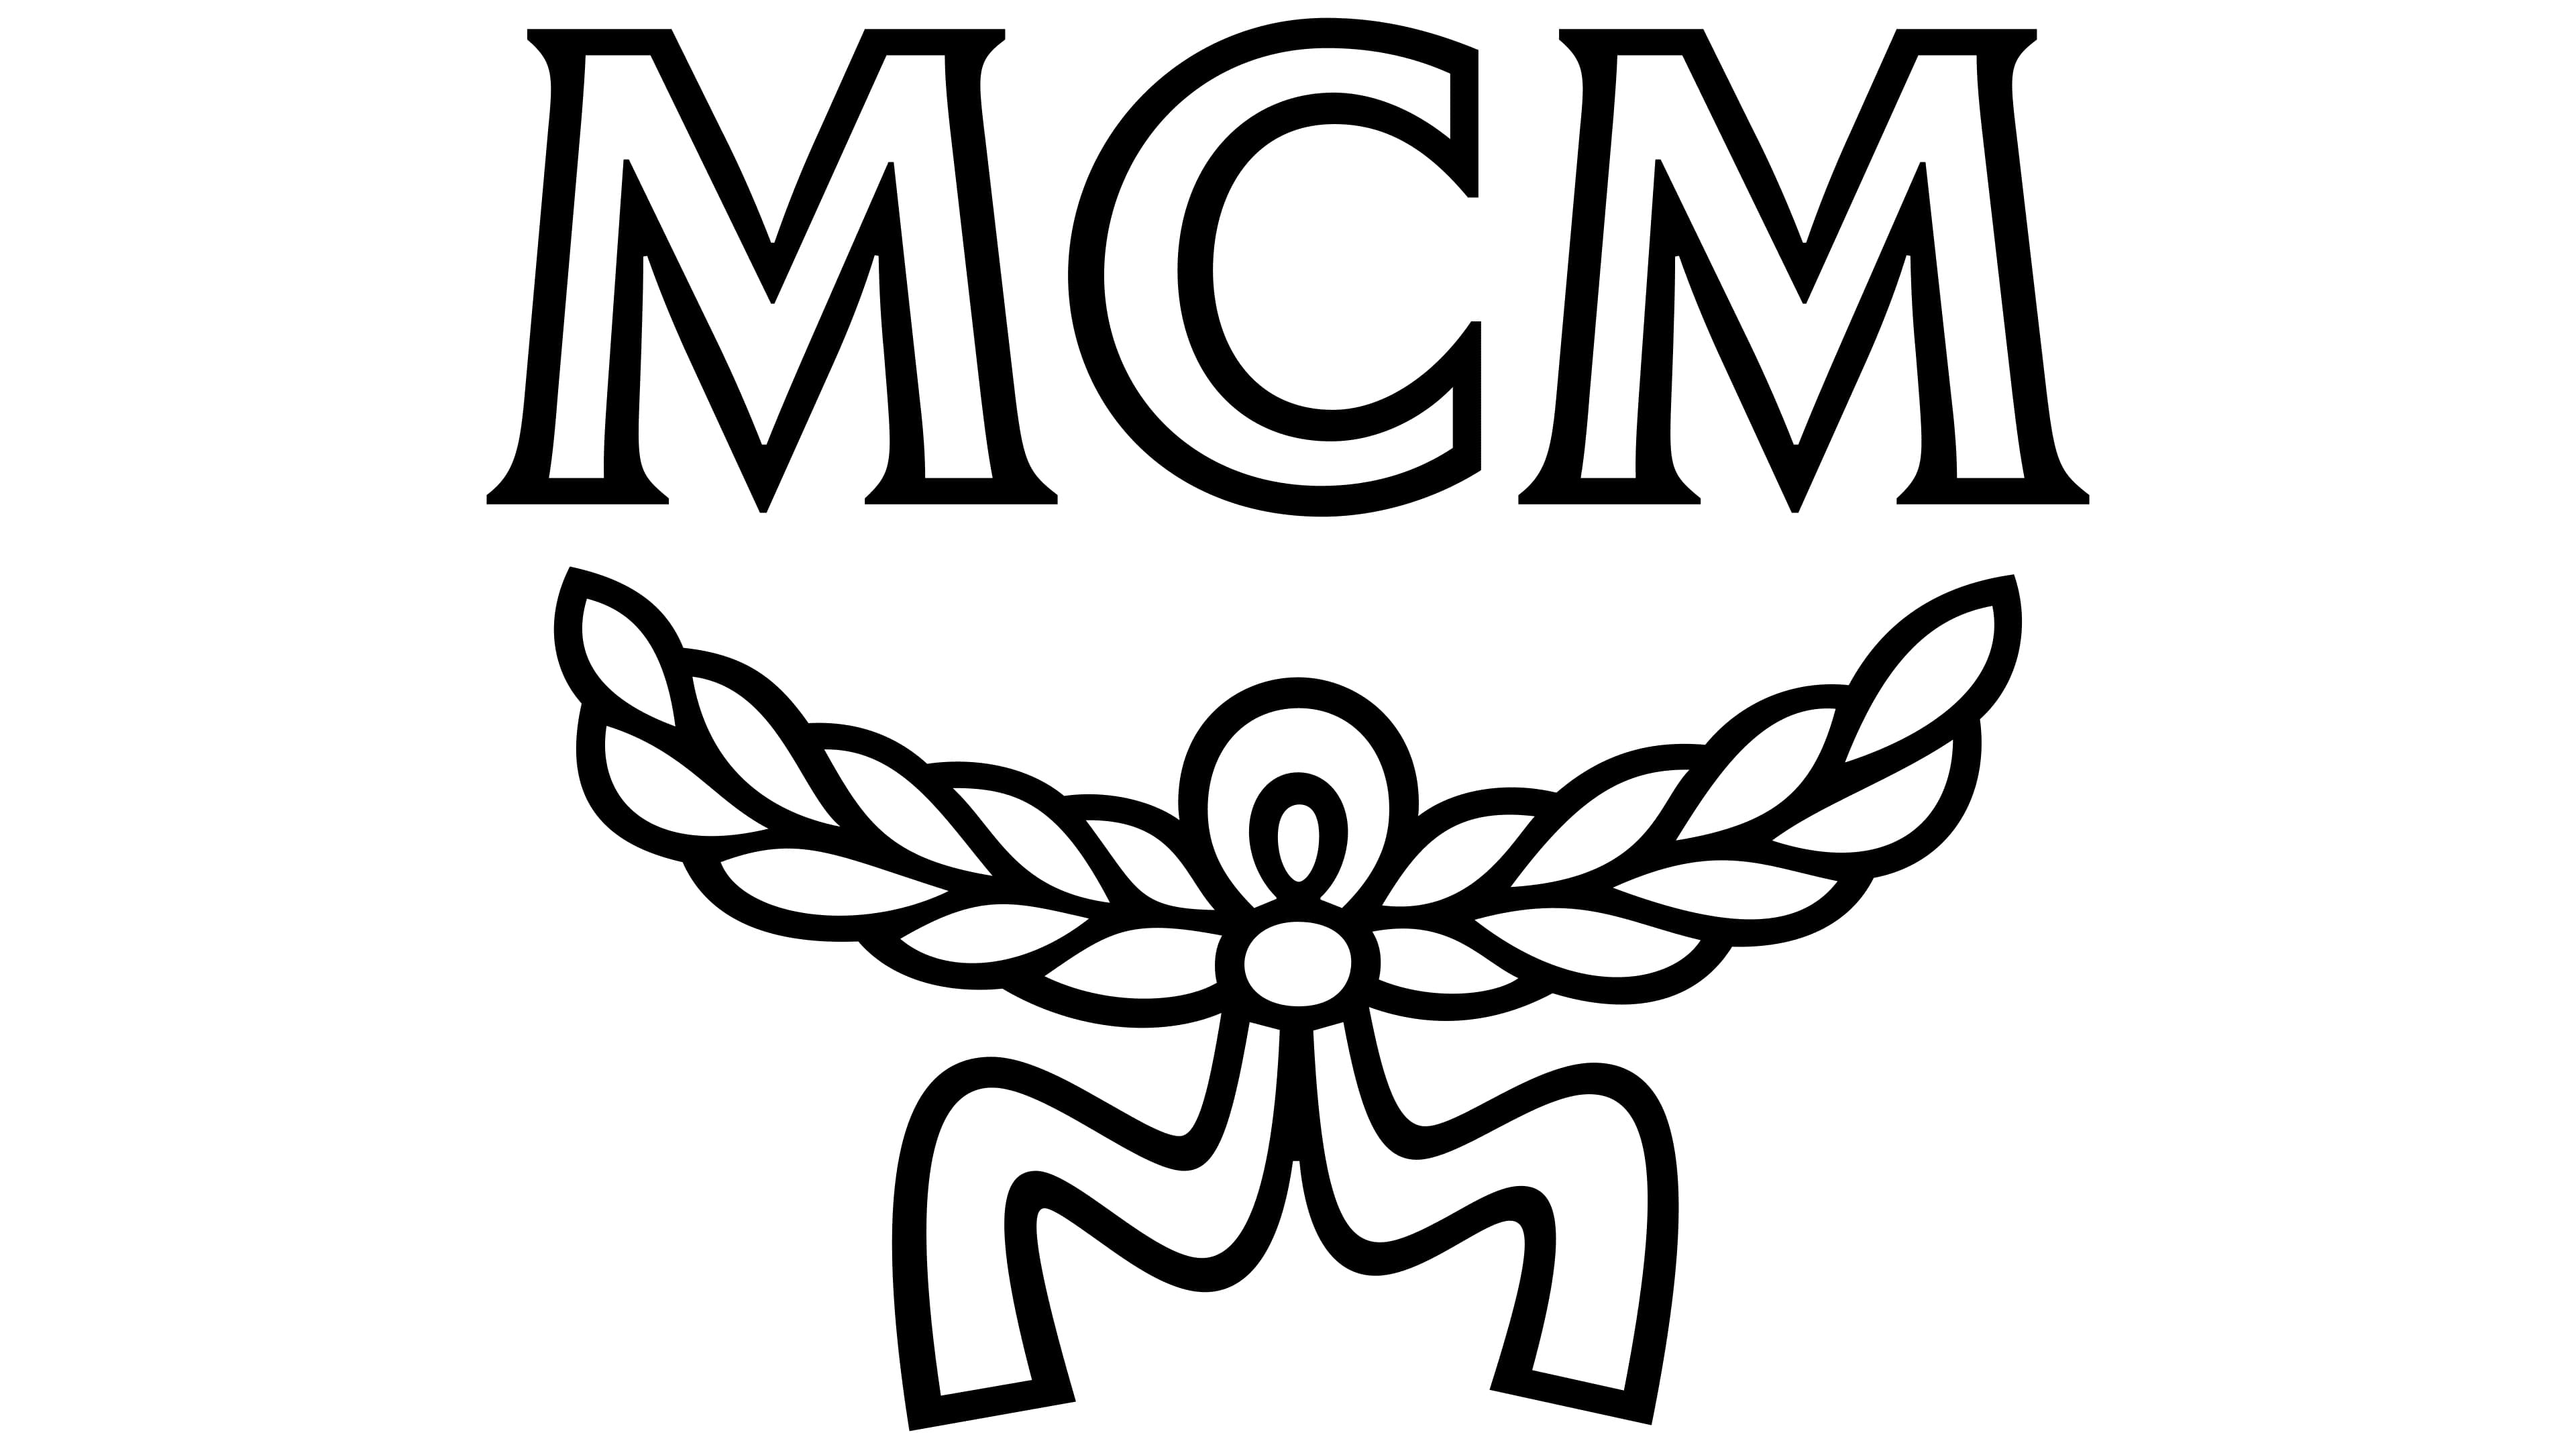 MCM Logos  Industry logo, Corporate logo, Logo design